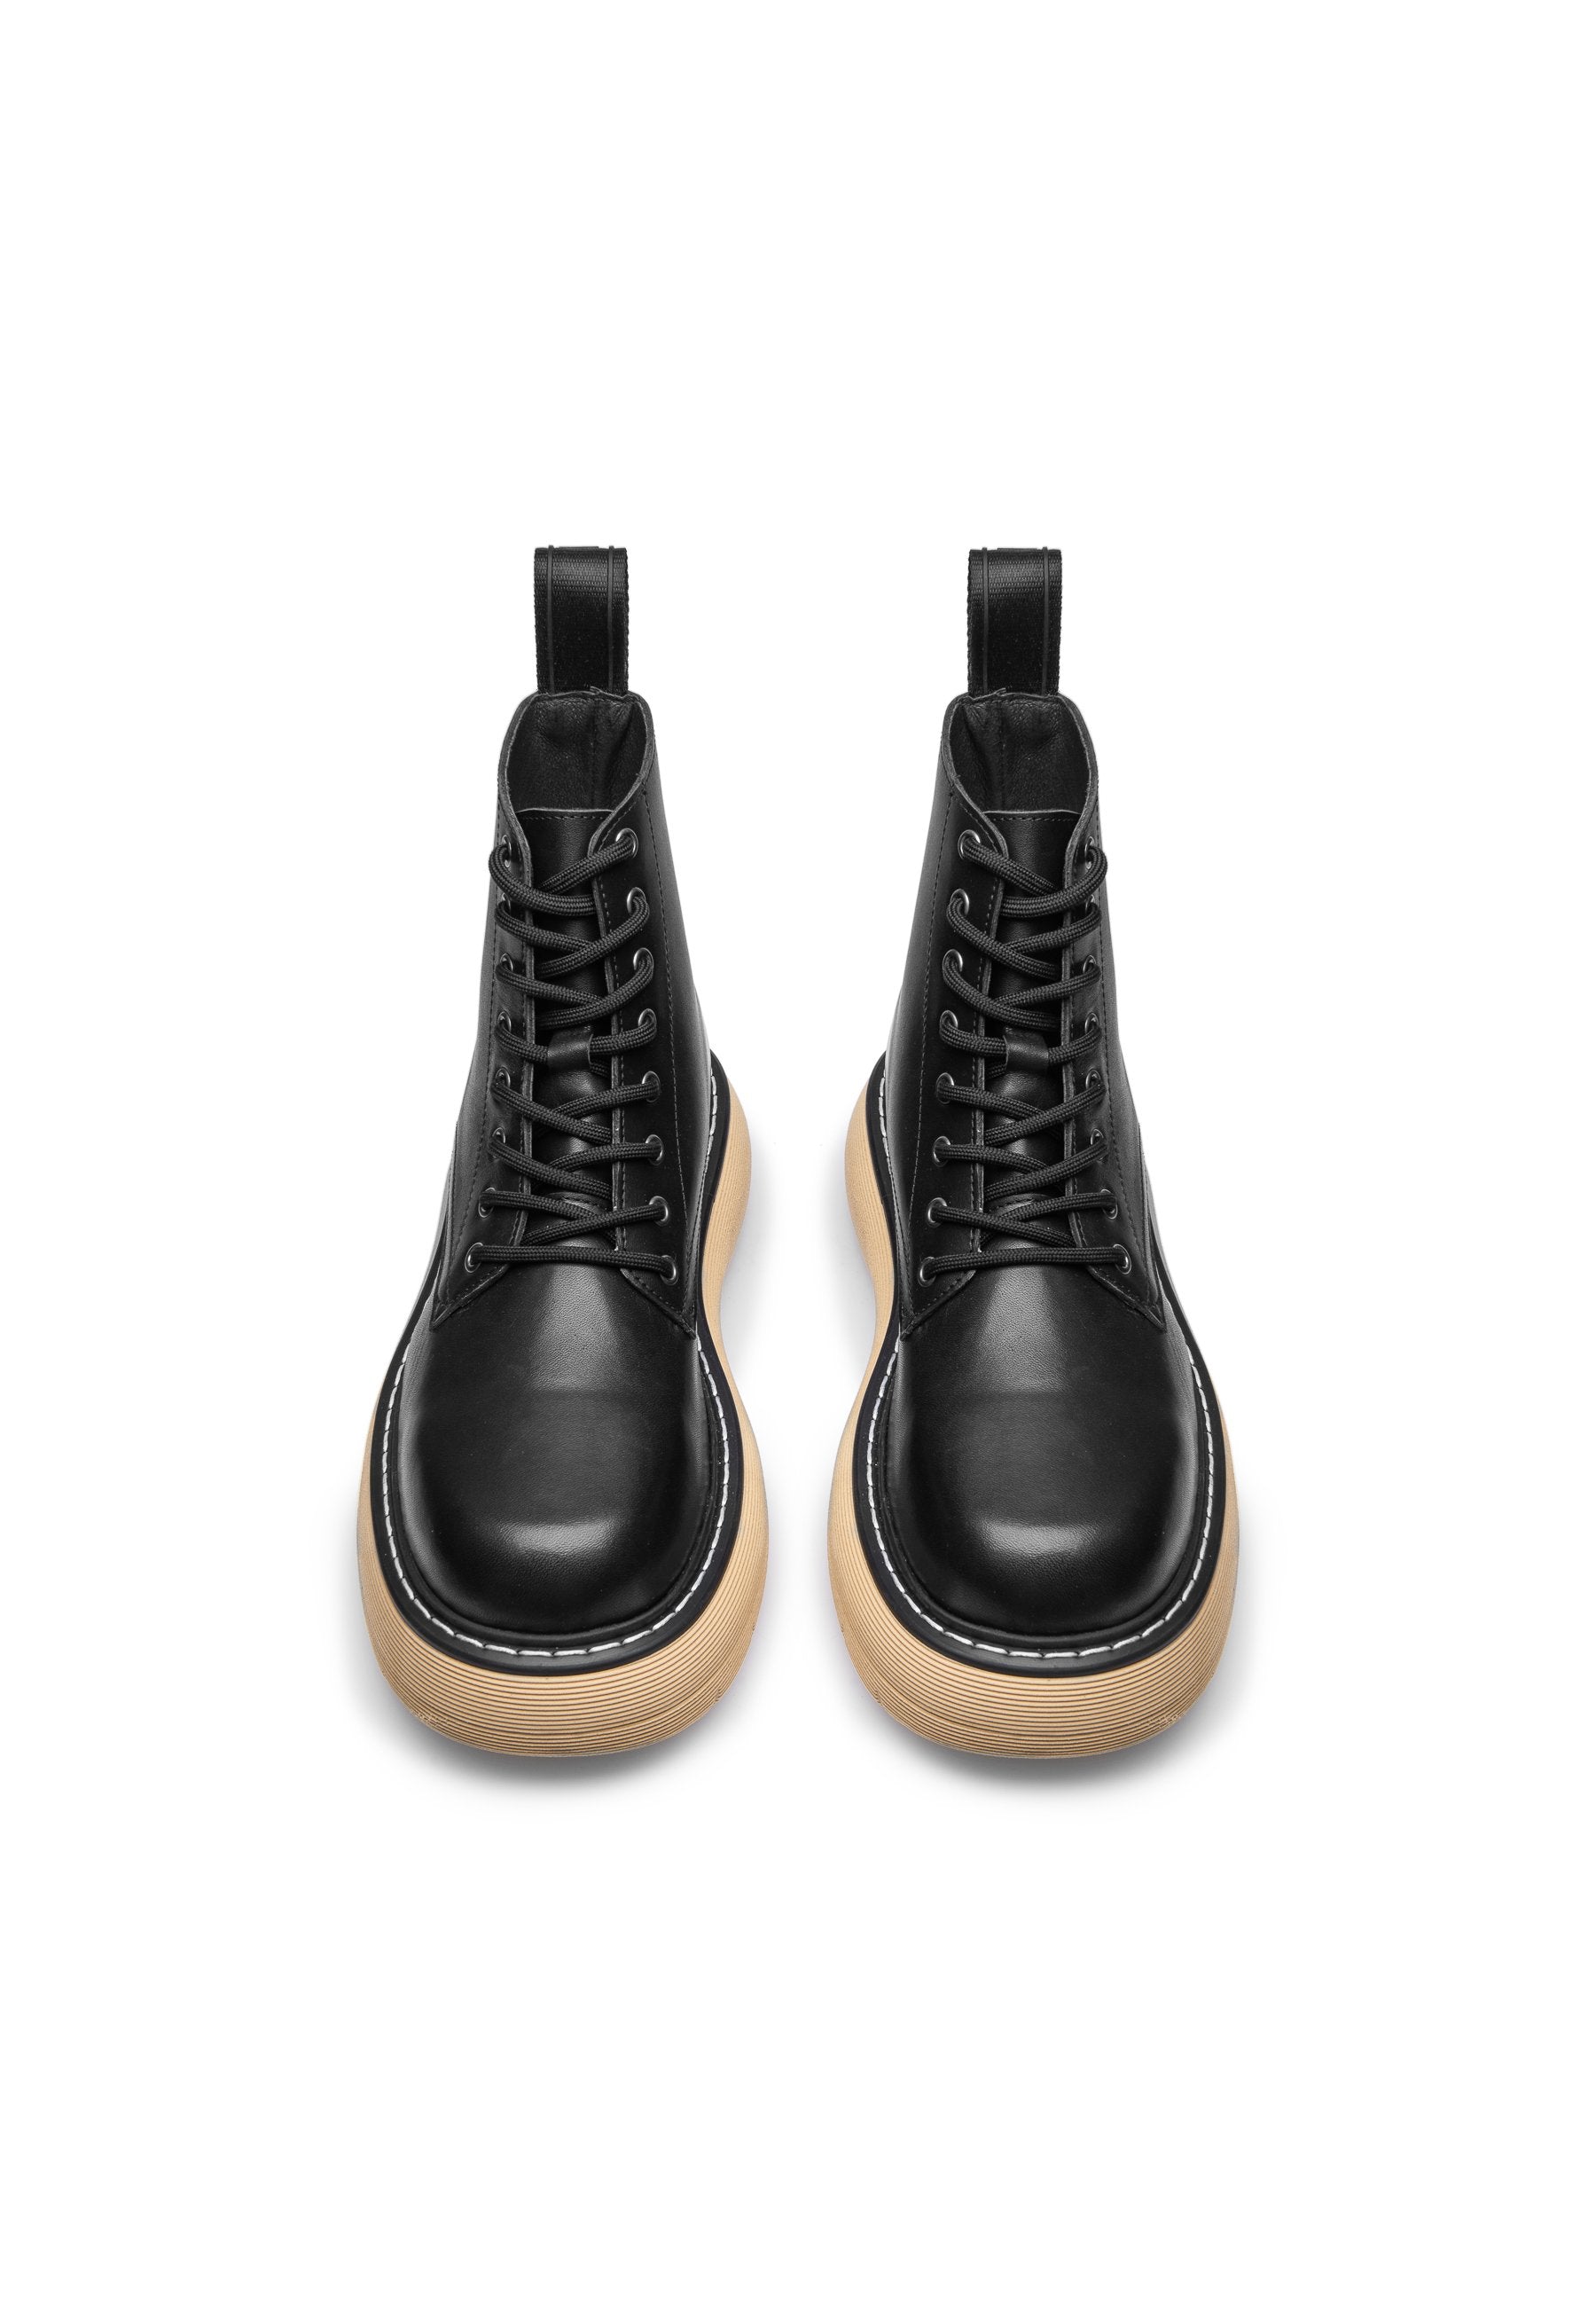 Jane Black Leather Combat Boots LAST1482 - 07